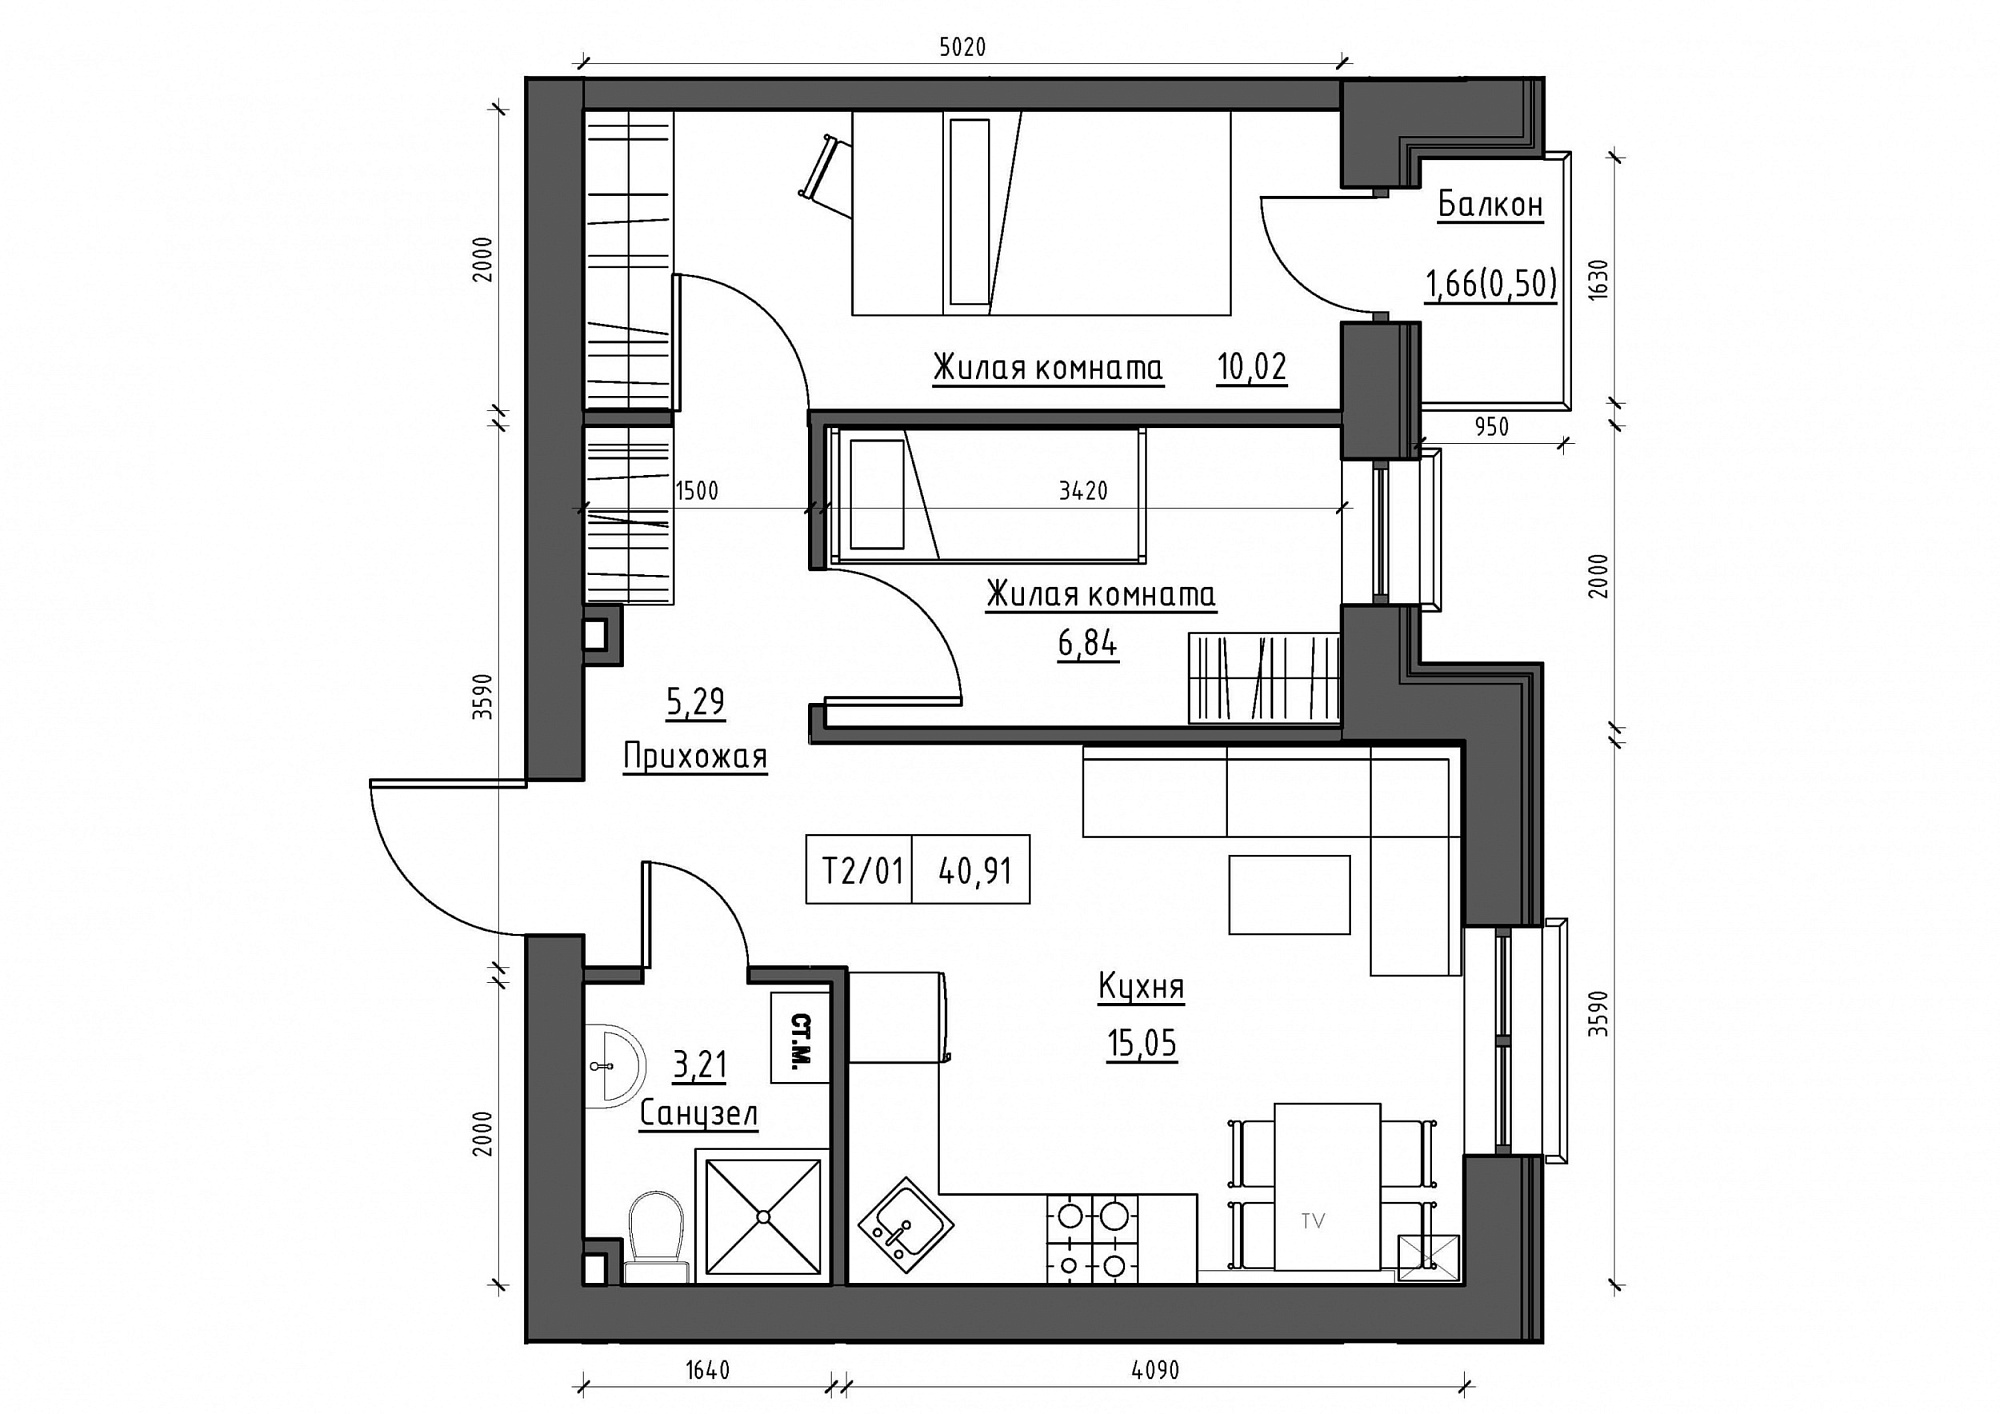 Planning 2-rm flats area 40.91m2, KS-011-03/0006.